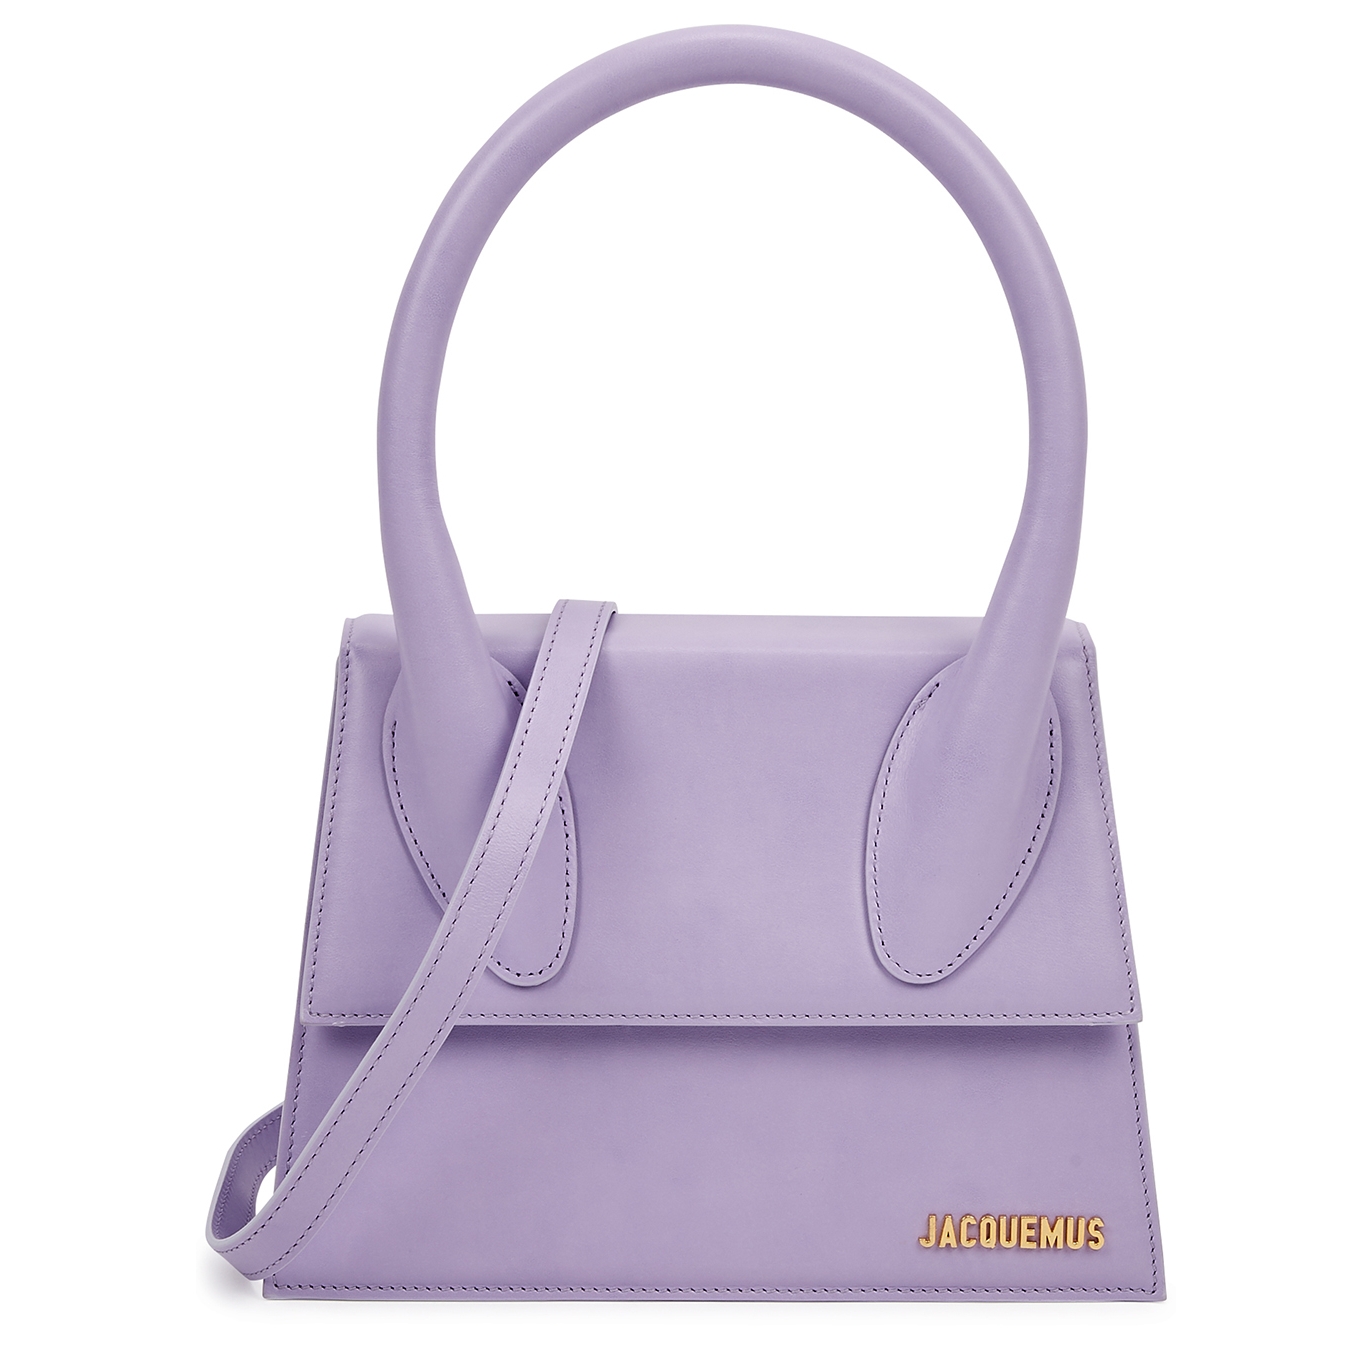 Jacquemus Le Grande Chiquito Lilac Leather Top Handle Bag